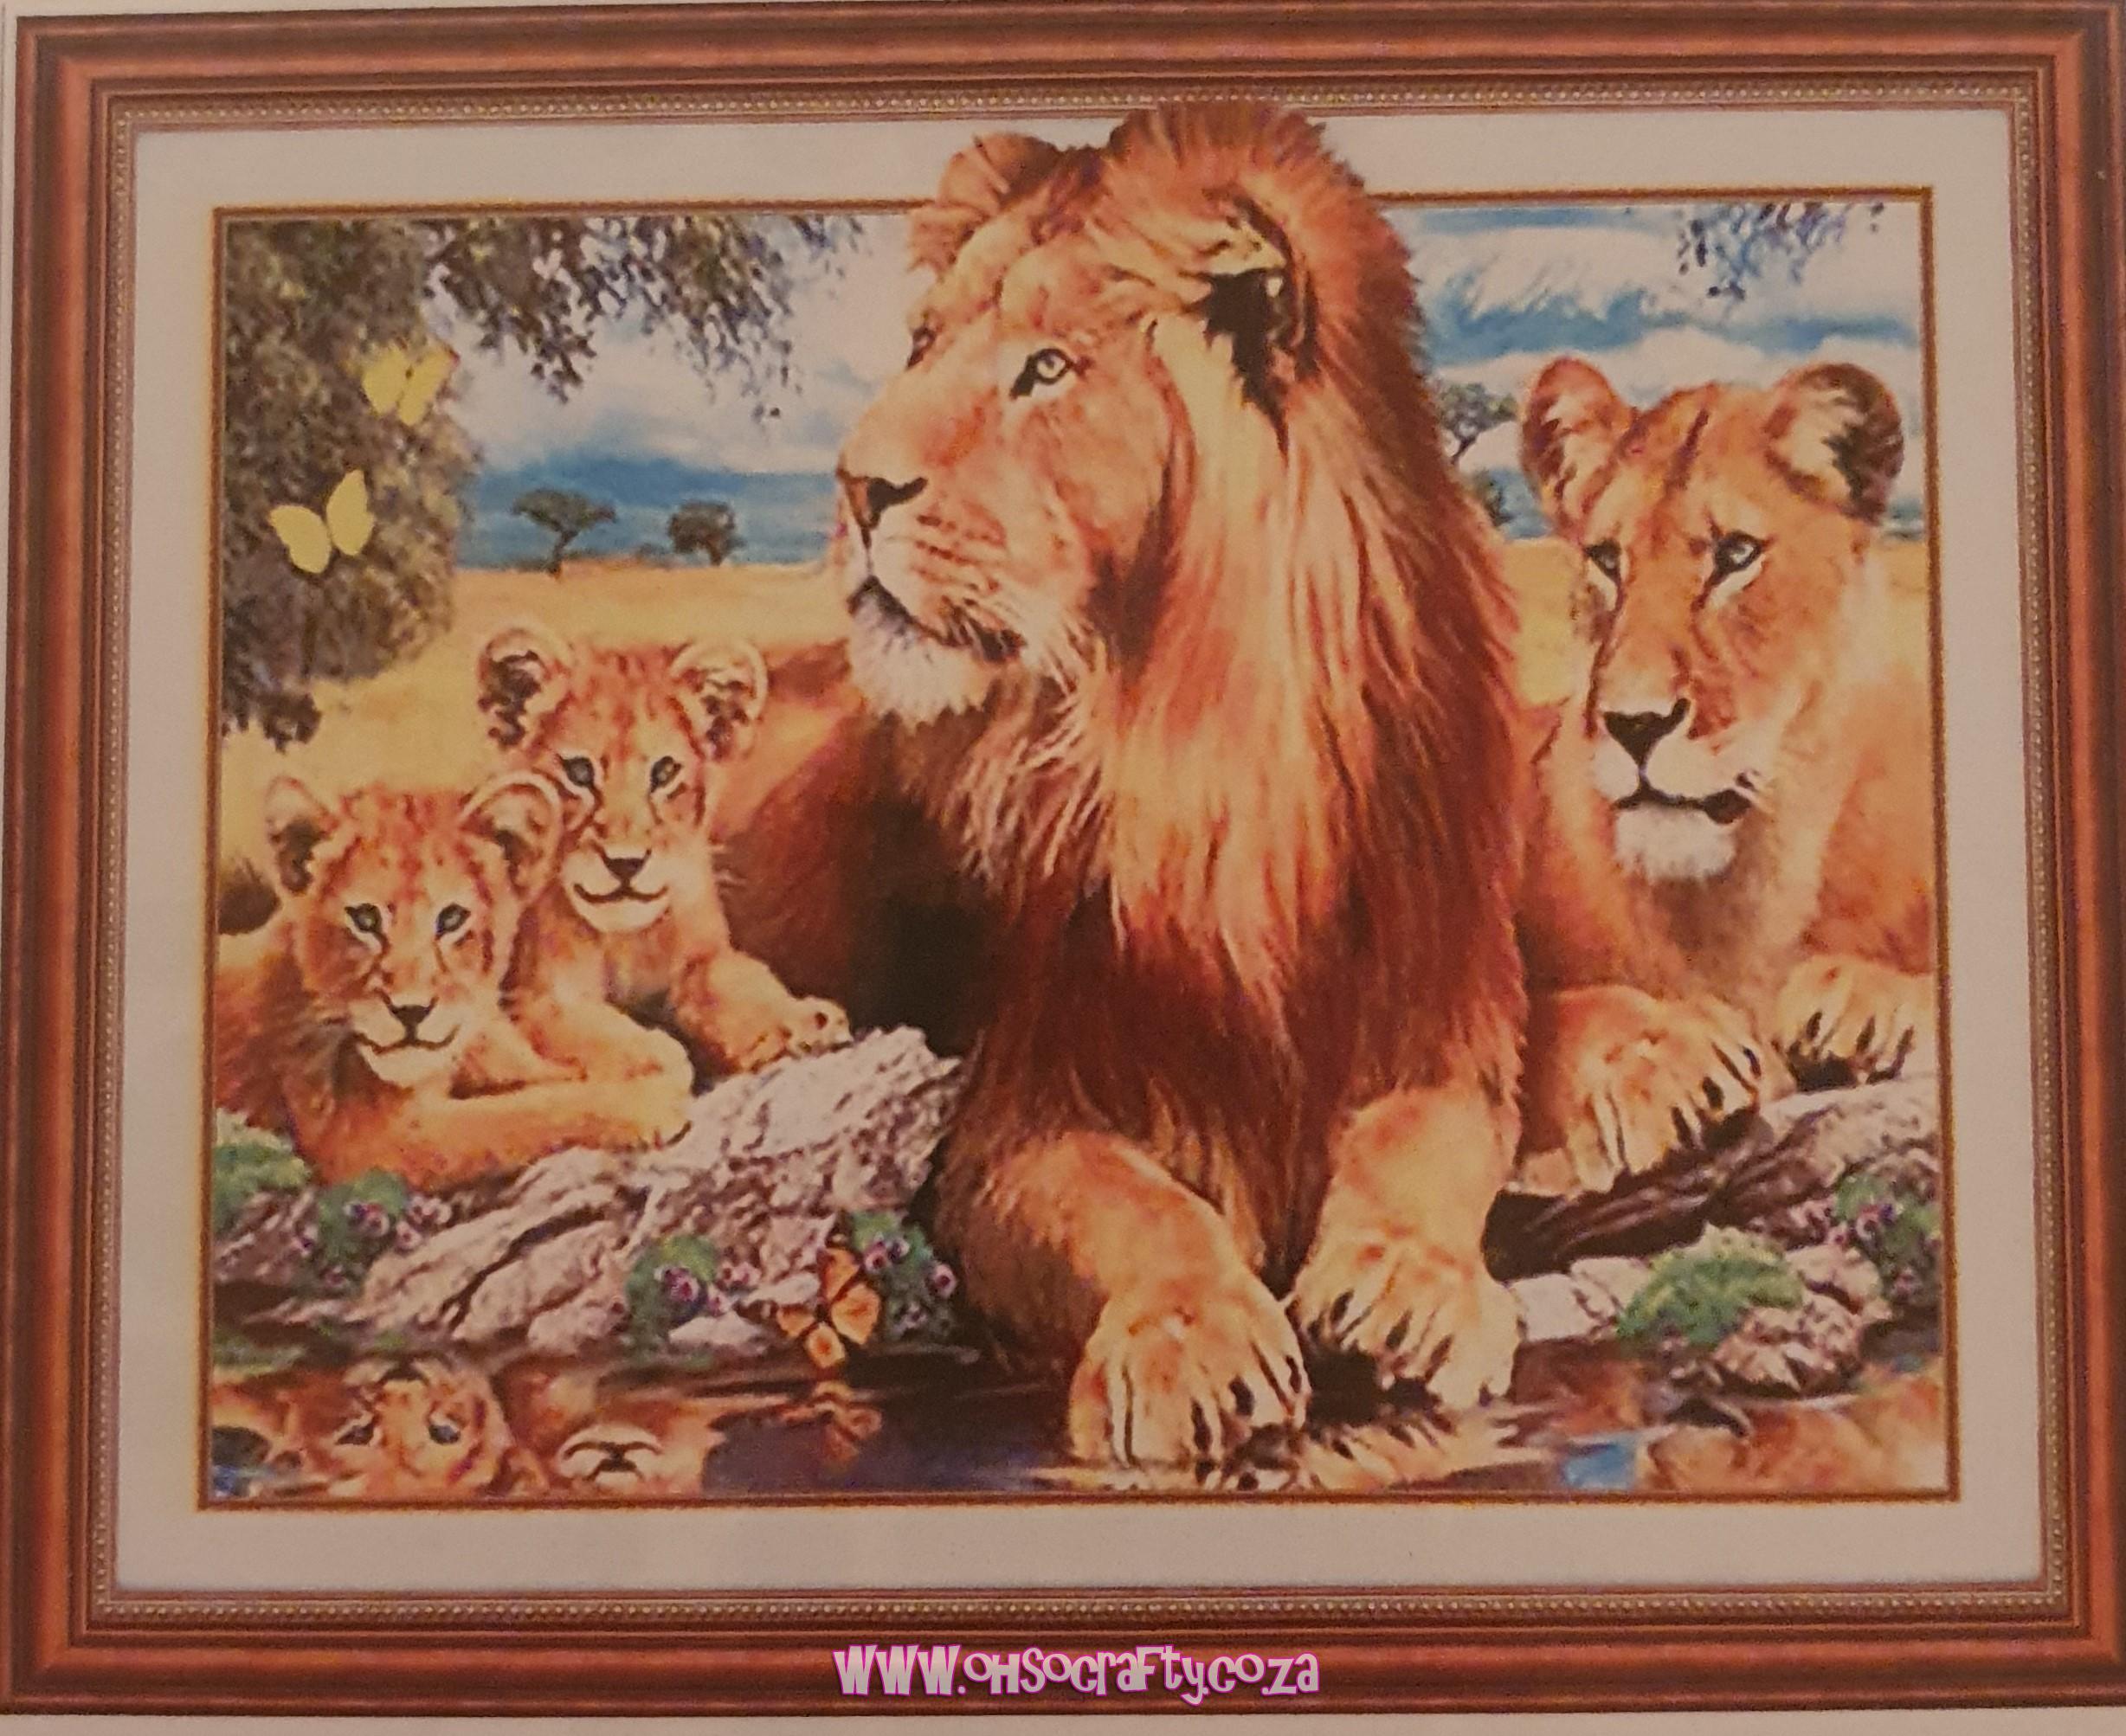 Lion Family Diamond Painting Kit 40cm x 50cm Framed HZ8016 - OHsoCrafty